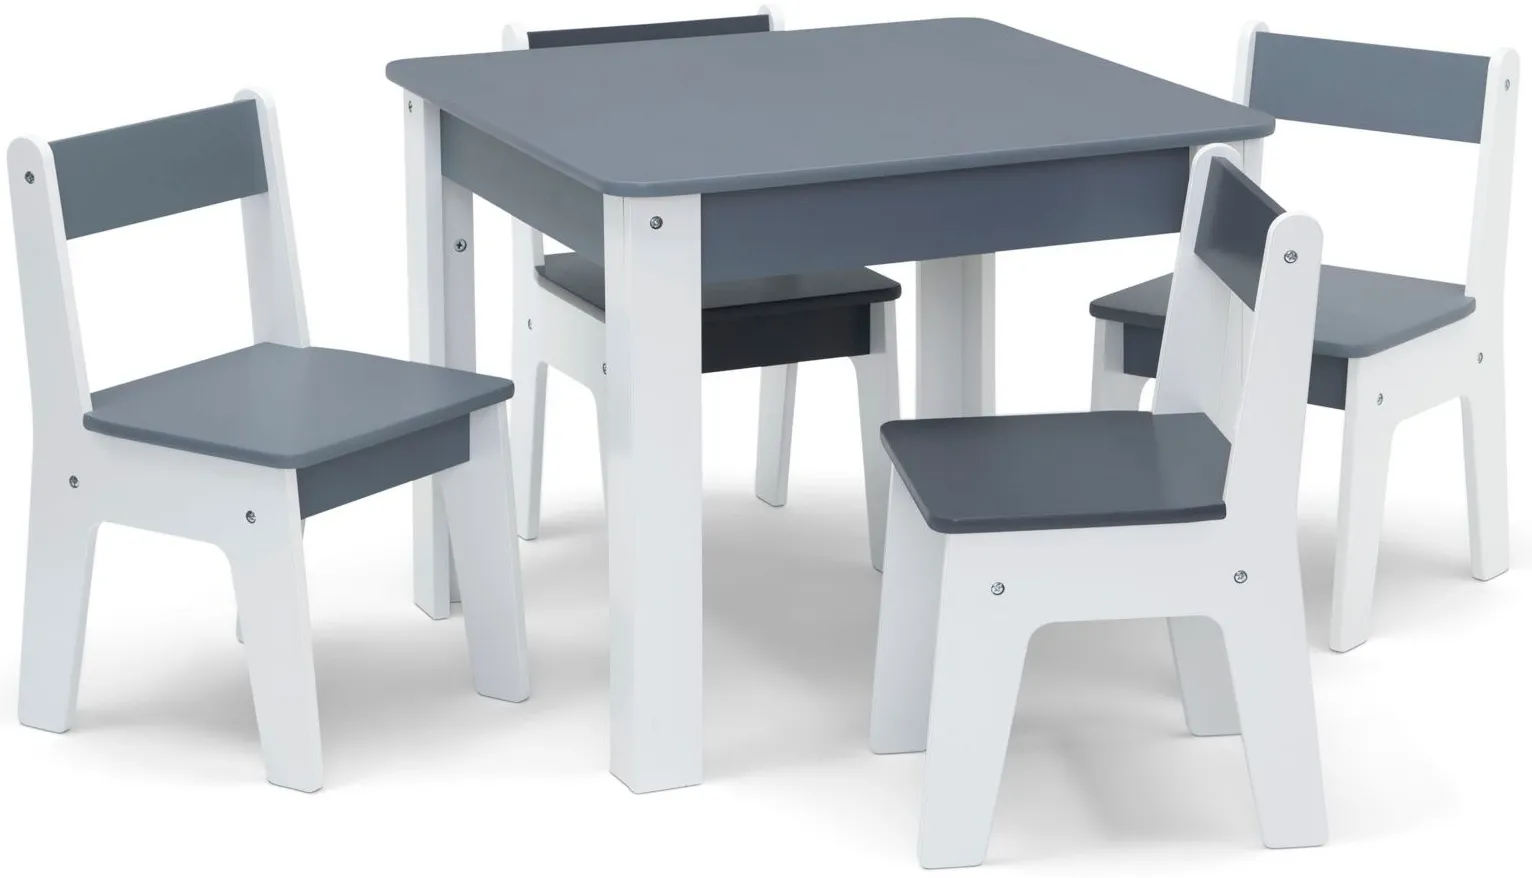 GapKids Table and 4 Chair Set By Delta Children in Gray by Delta Children